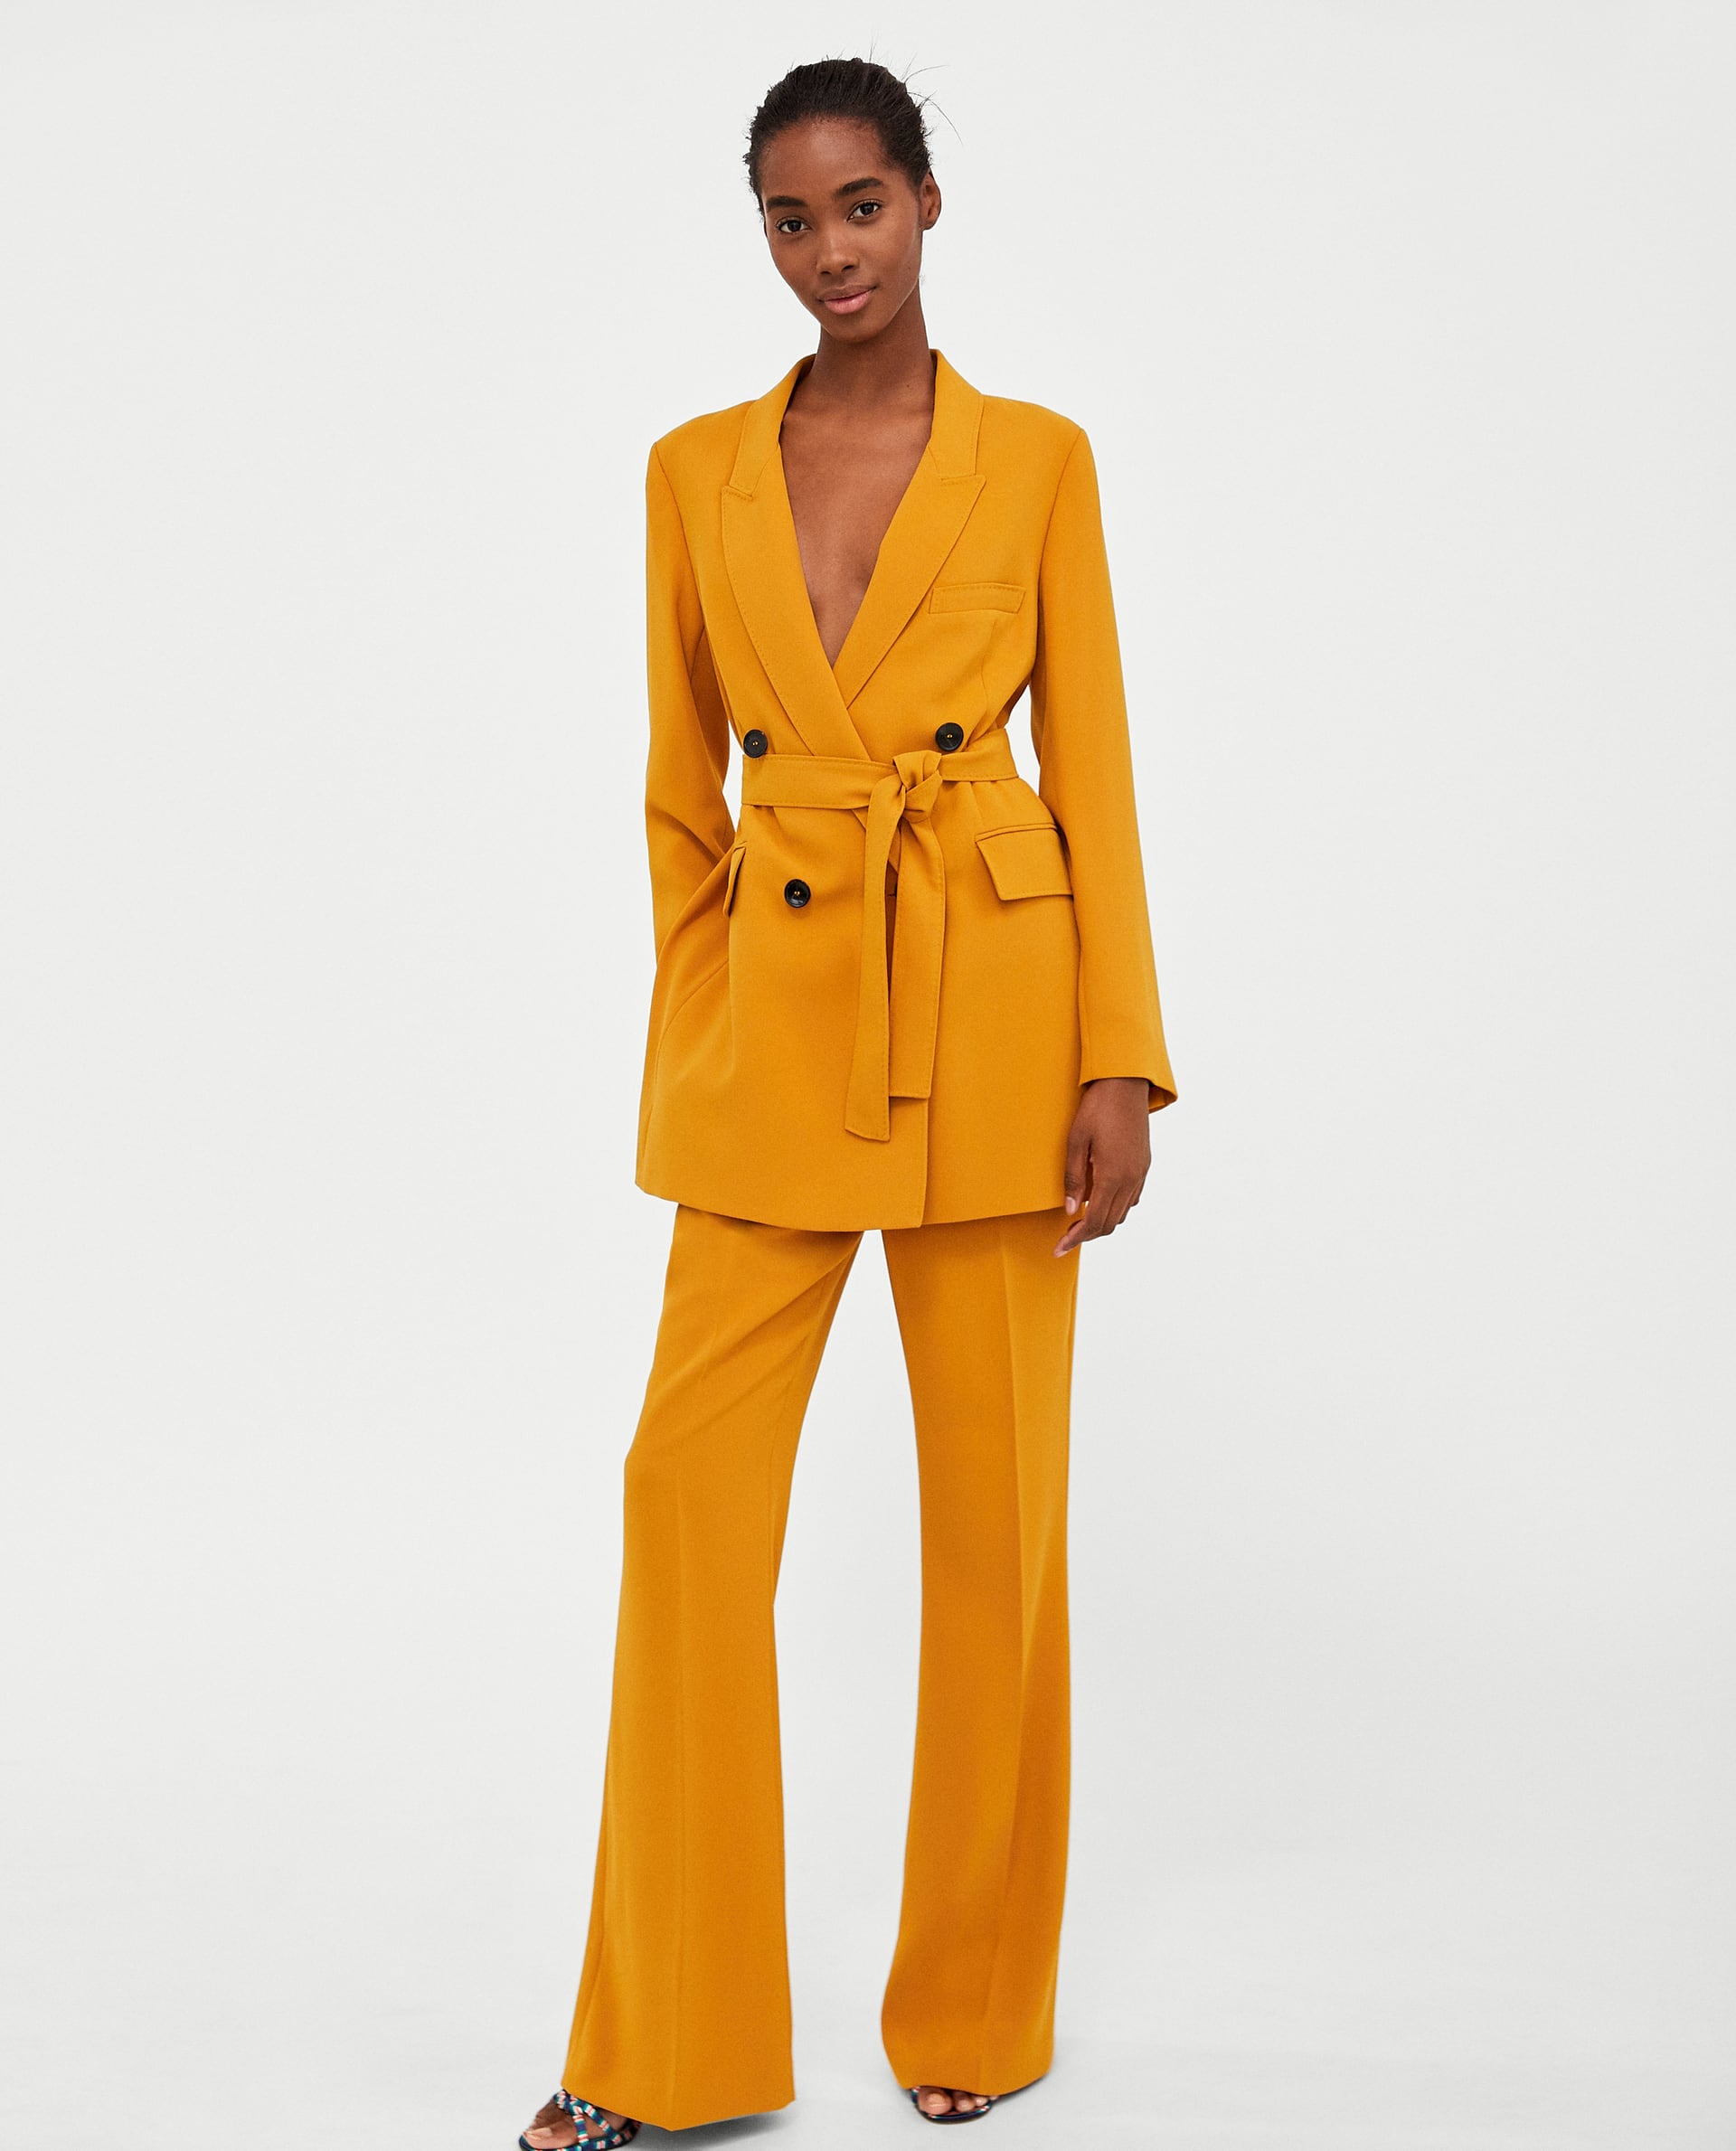 Zara Pantsuit | Gigi Hadid Wore a Suit 